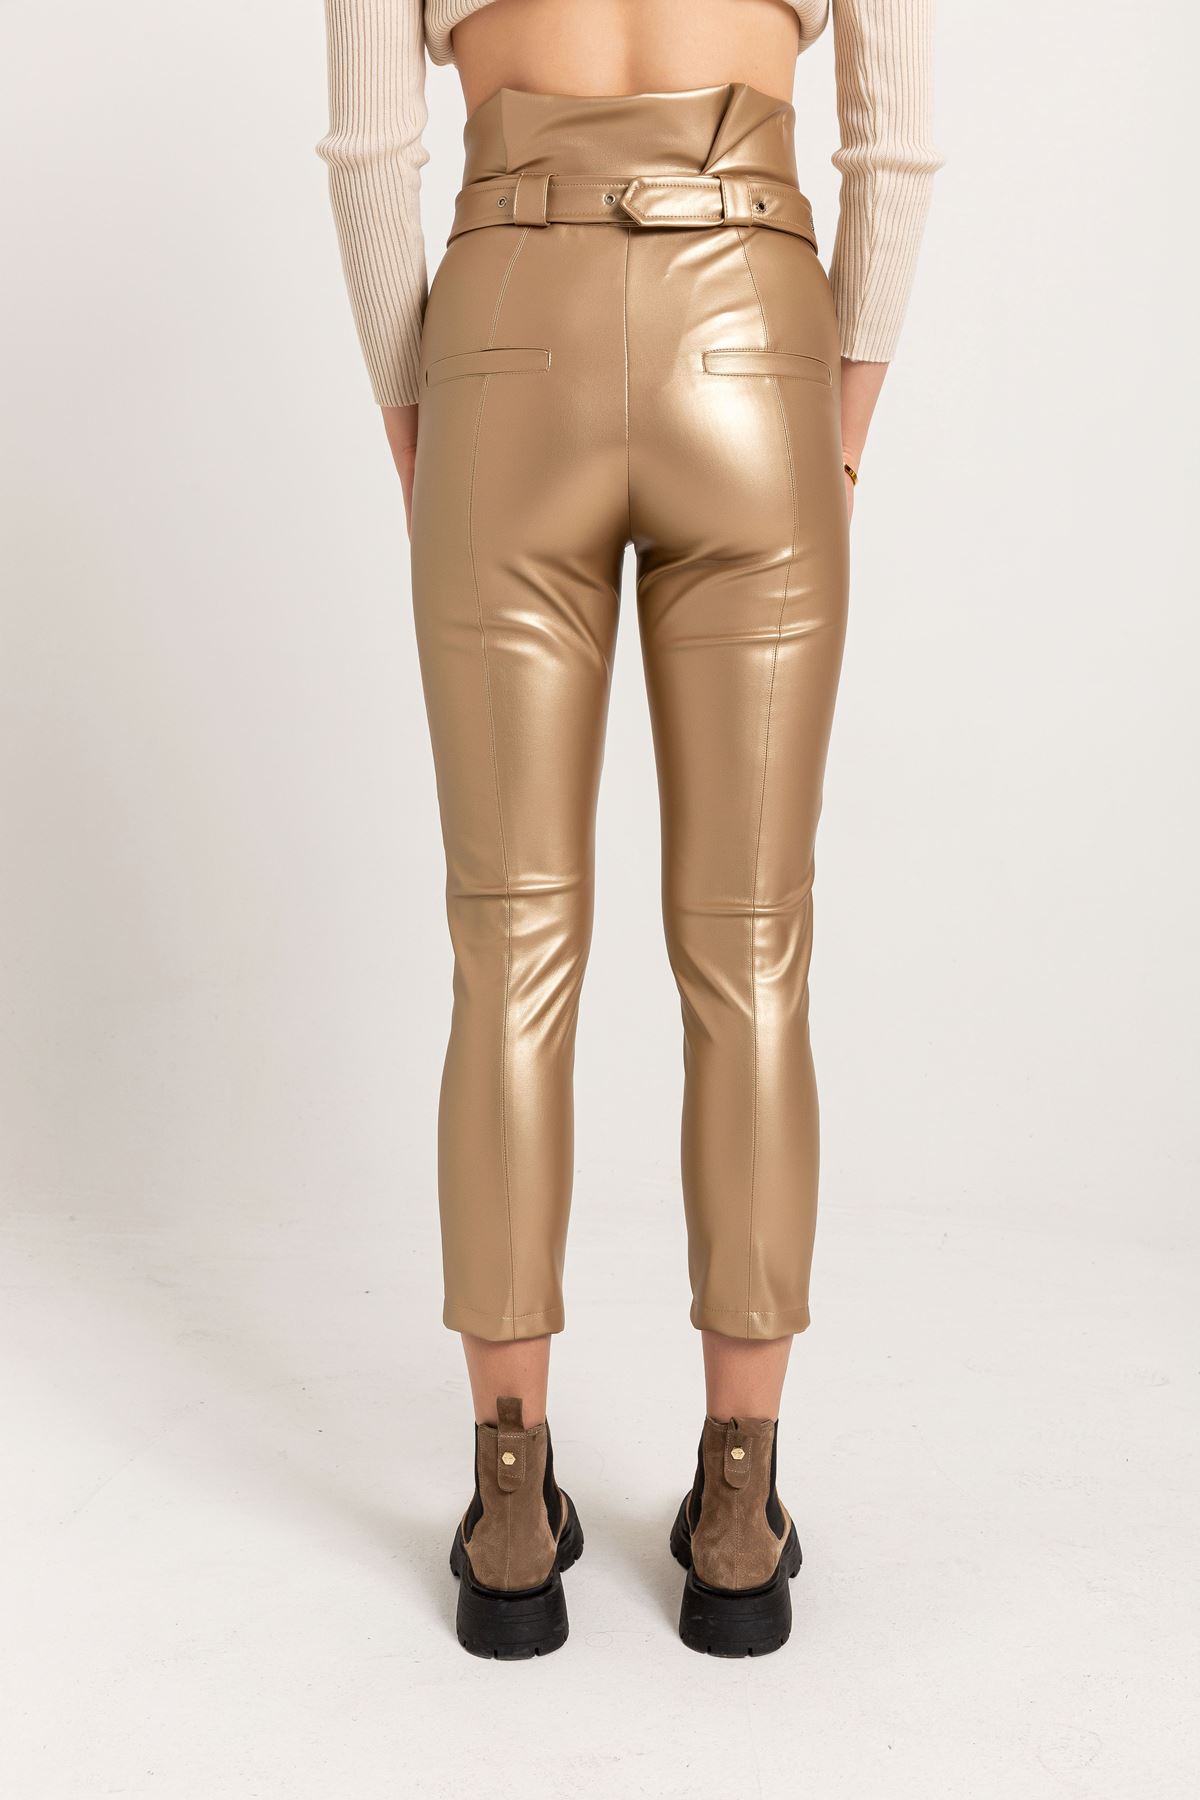 Leather Fabric Long Tigth Fit High Waist Belt Women Trouser-Gold